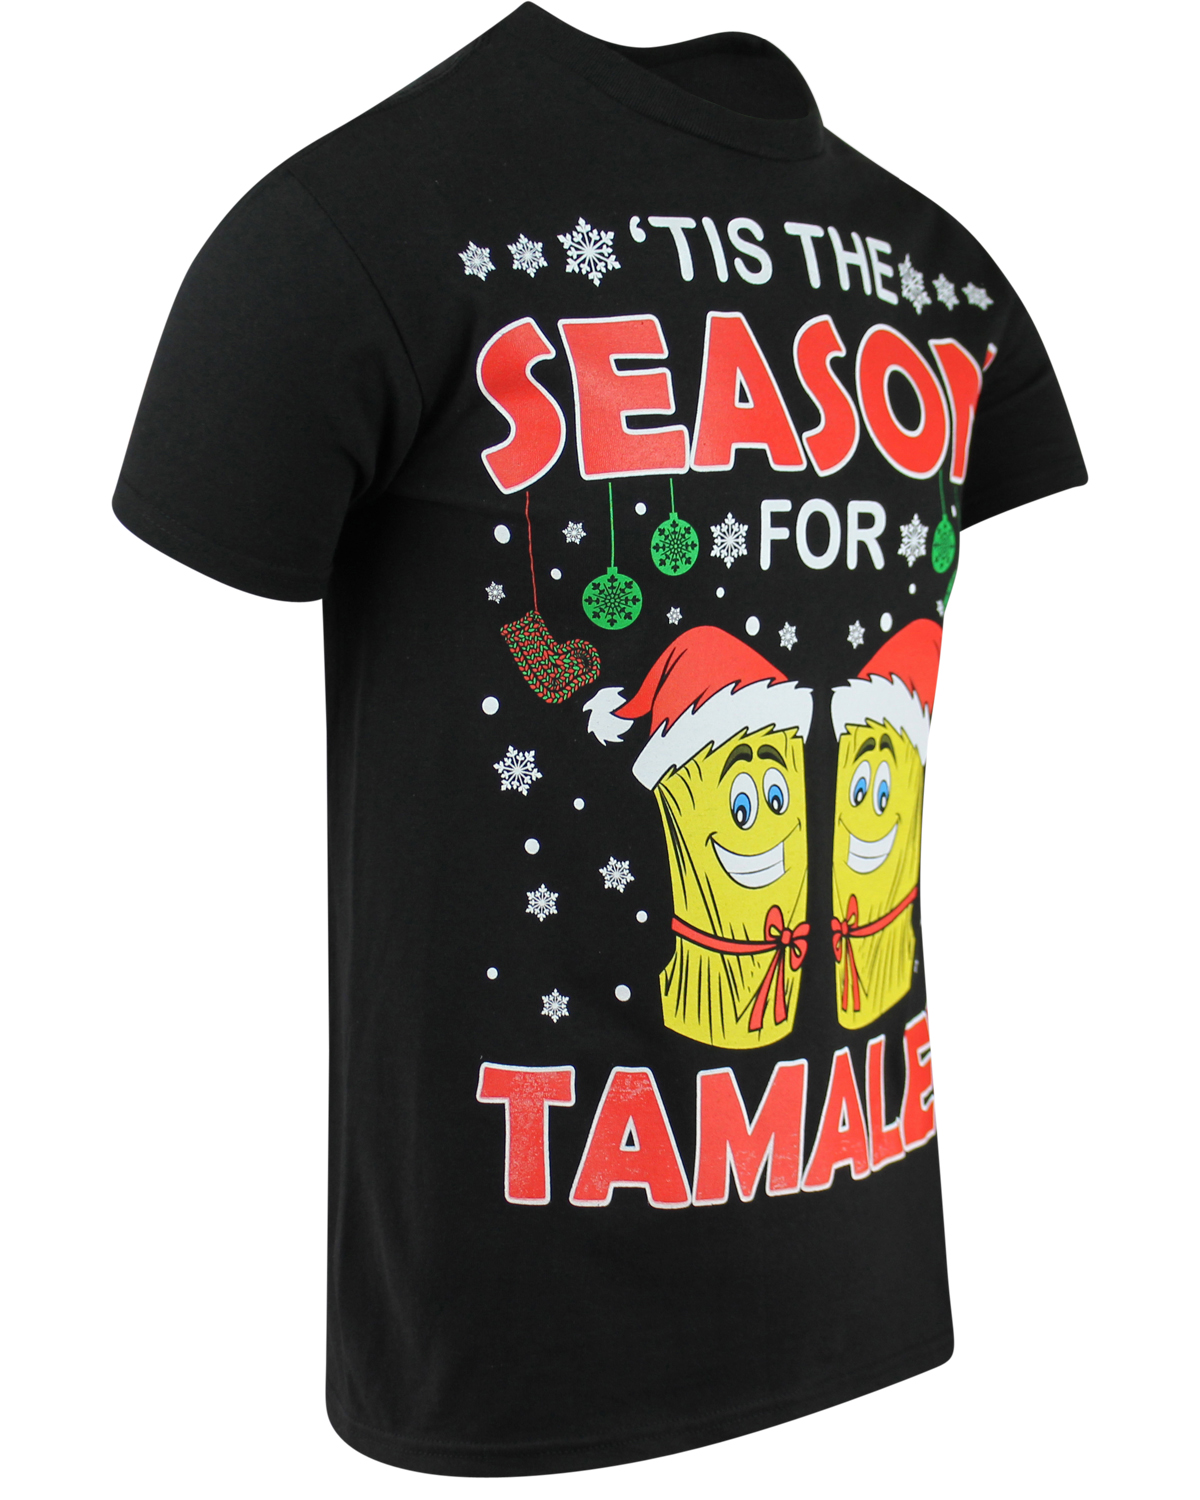 Shirtbanc Tis The Season For Tamales Mens Shirts Funny Christmas T Shirt Ebay